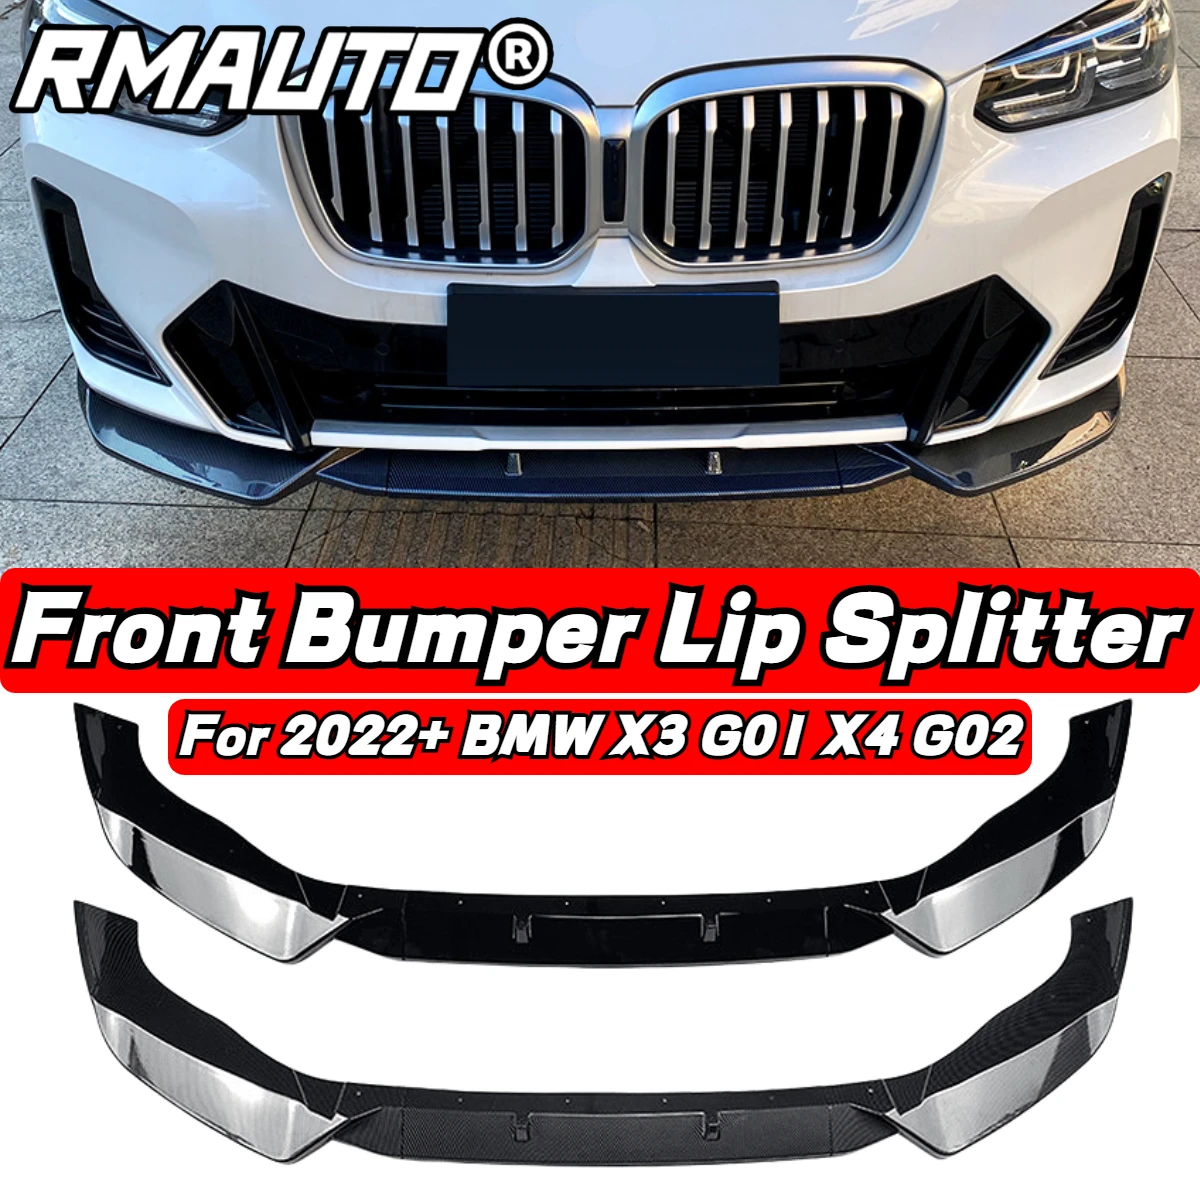 

RMAUTO Carbon Fiber Car Front Bumper Lip Spoiler Splitter Diffuser Guard Body Kit For 2022+ BMW X3 G01 X4 G02 M-Pack Accessories